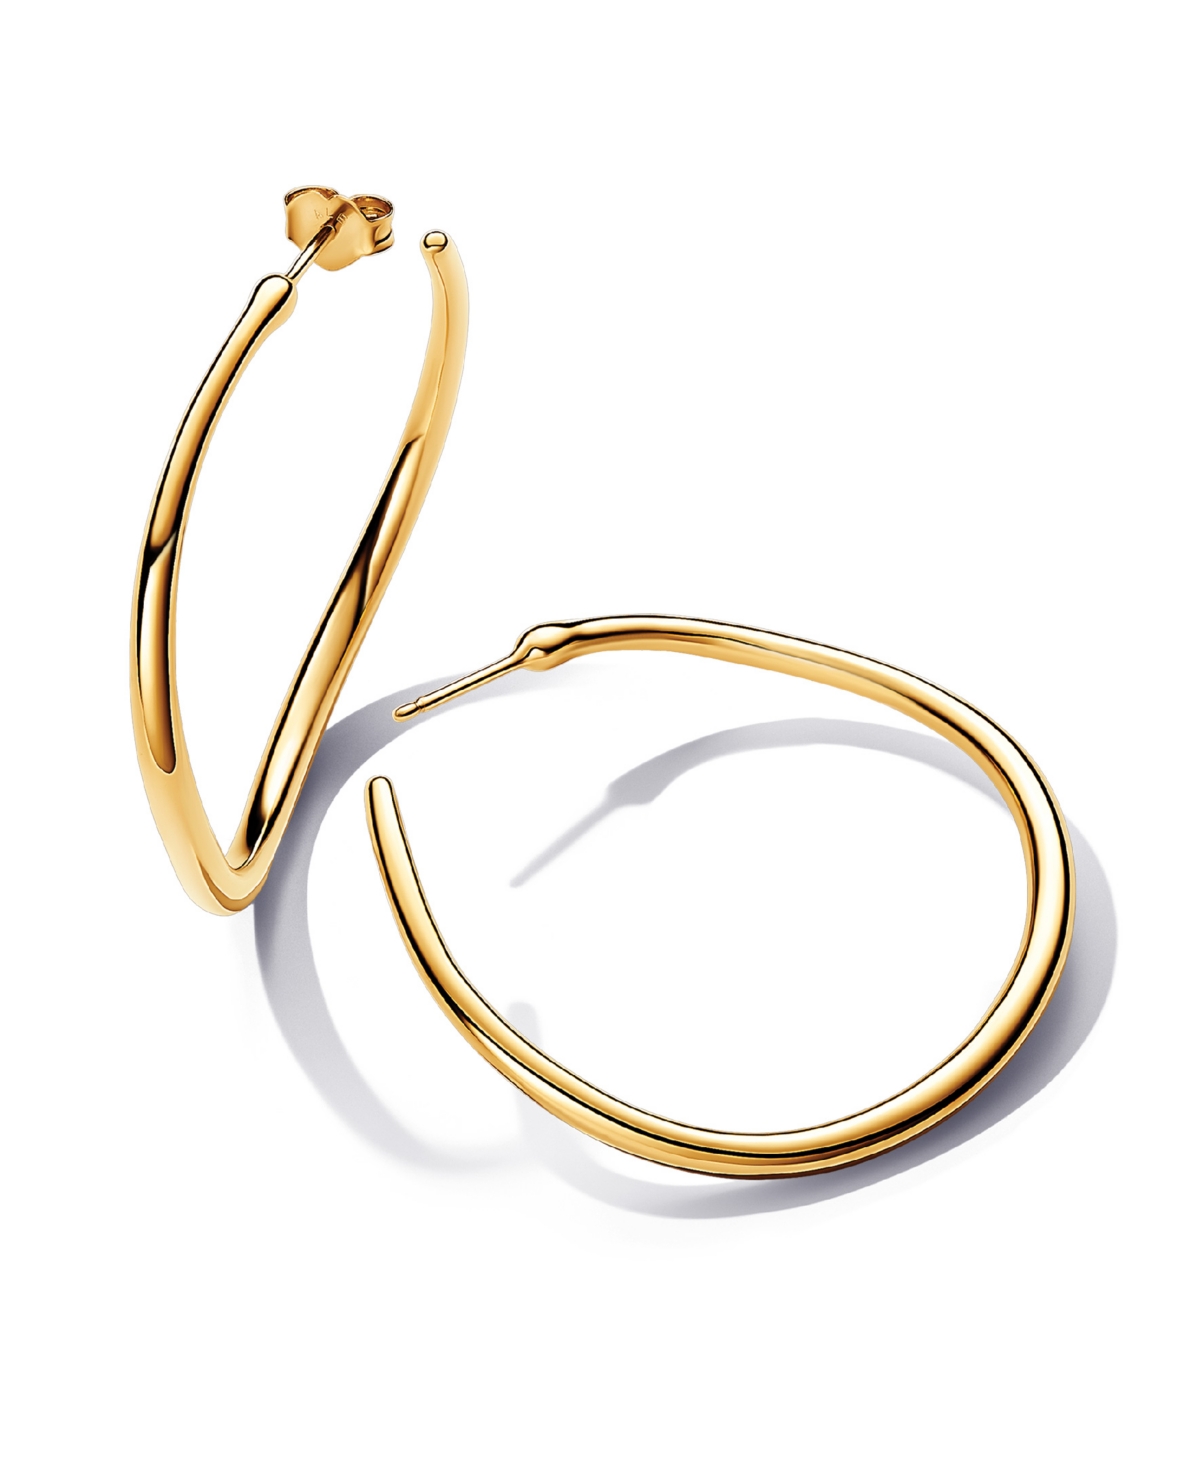 14k gold-plated Shaped Open 42 mm Hoop Earrings - Gold